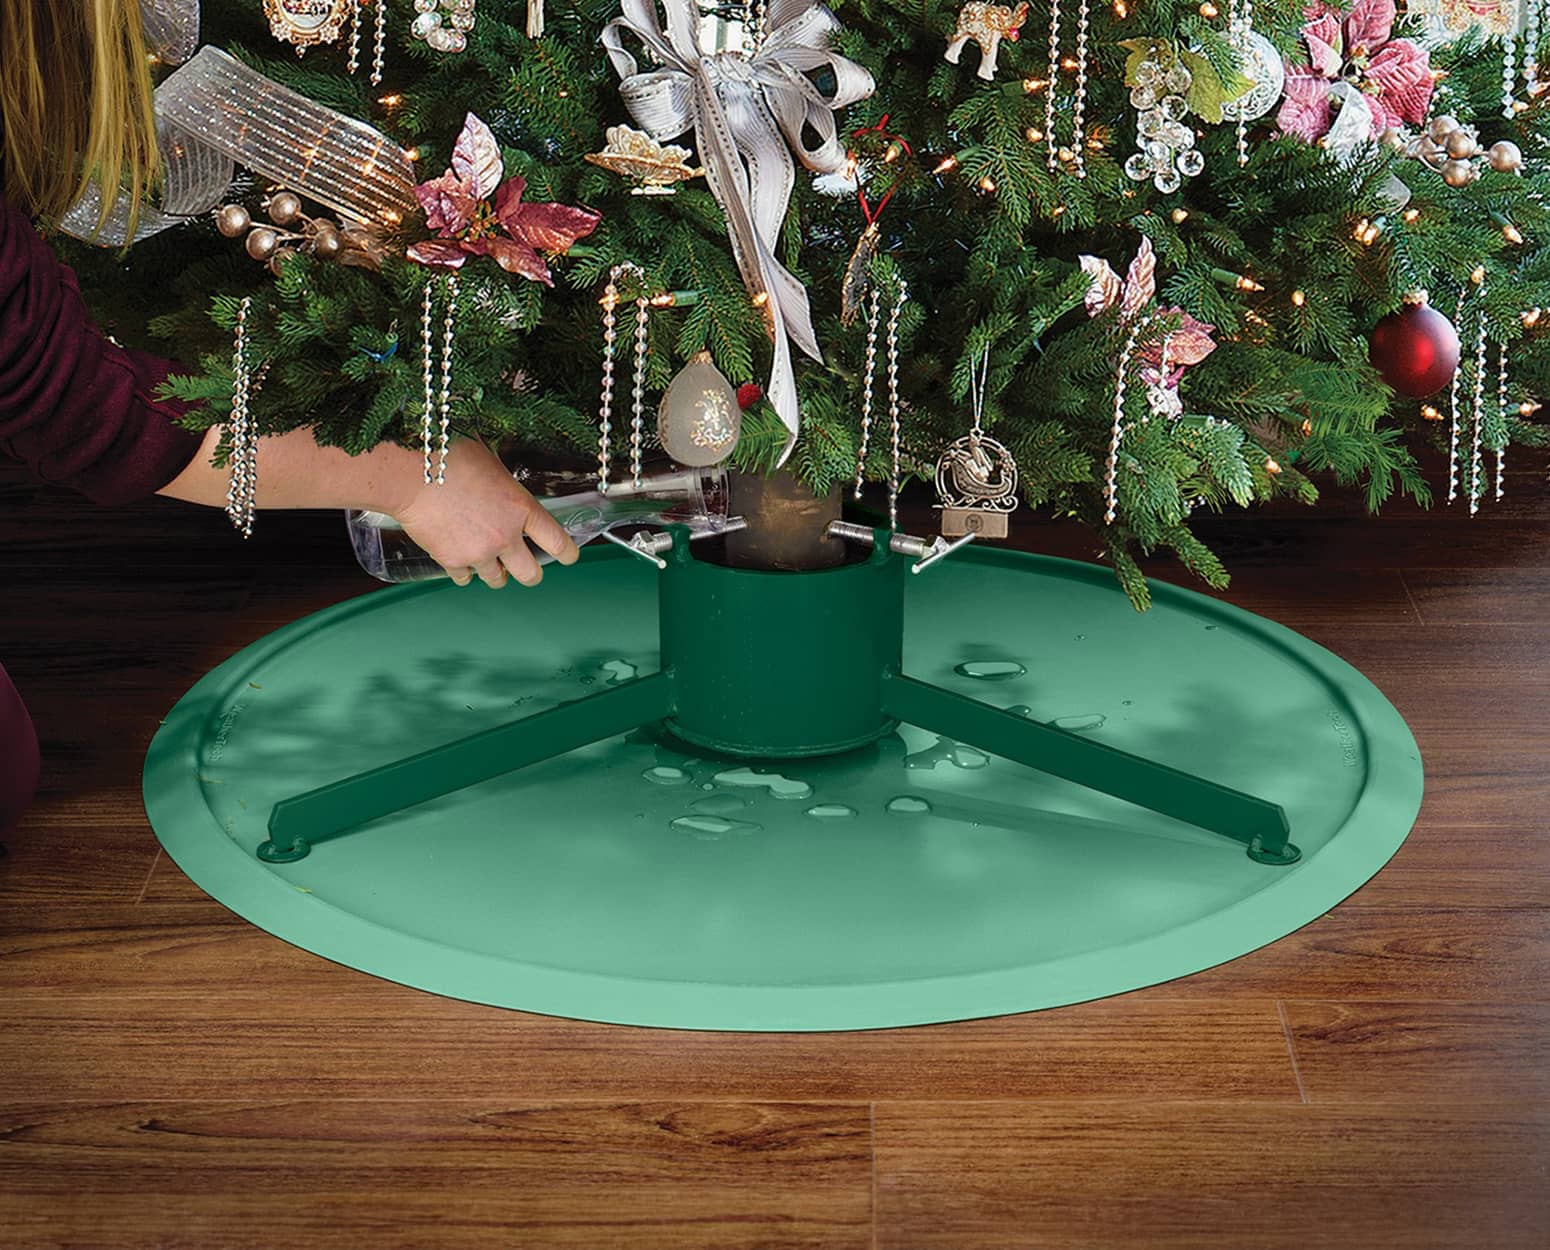 WeatherTech Christmas Tree Floor Mat - Holds 1 Gallon of Water!